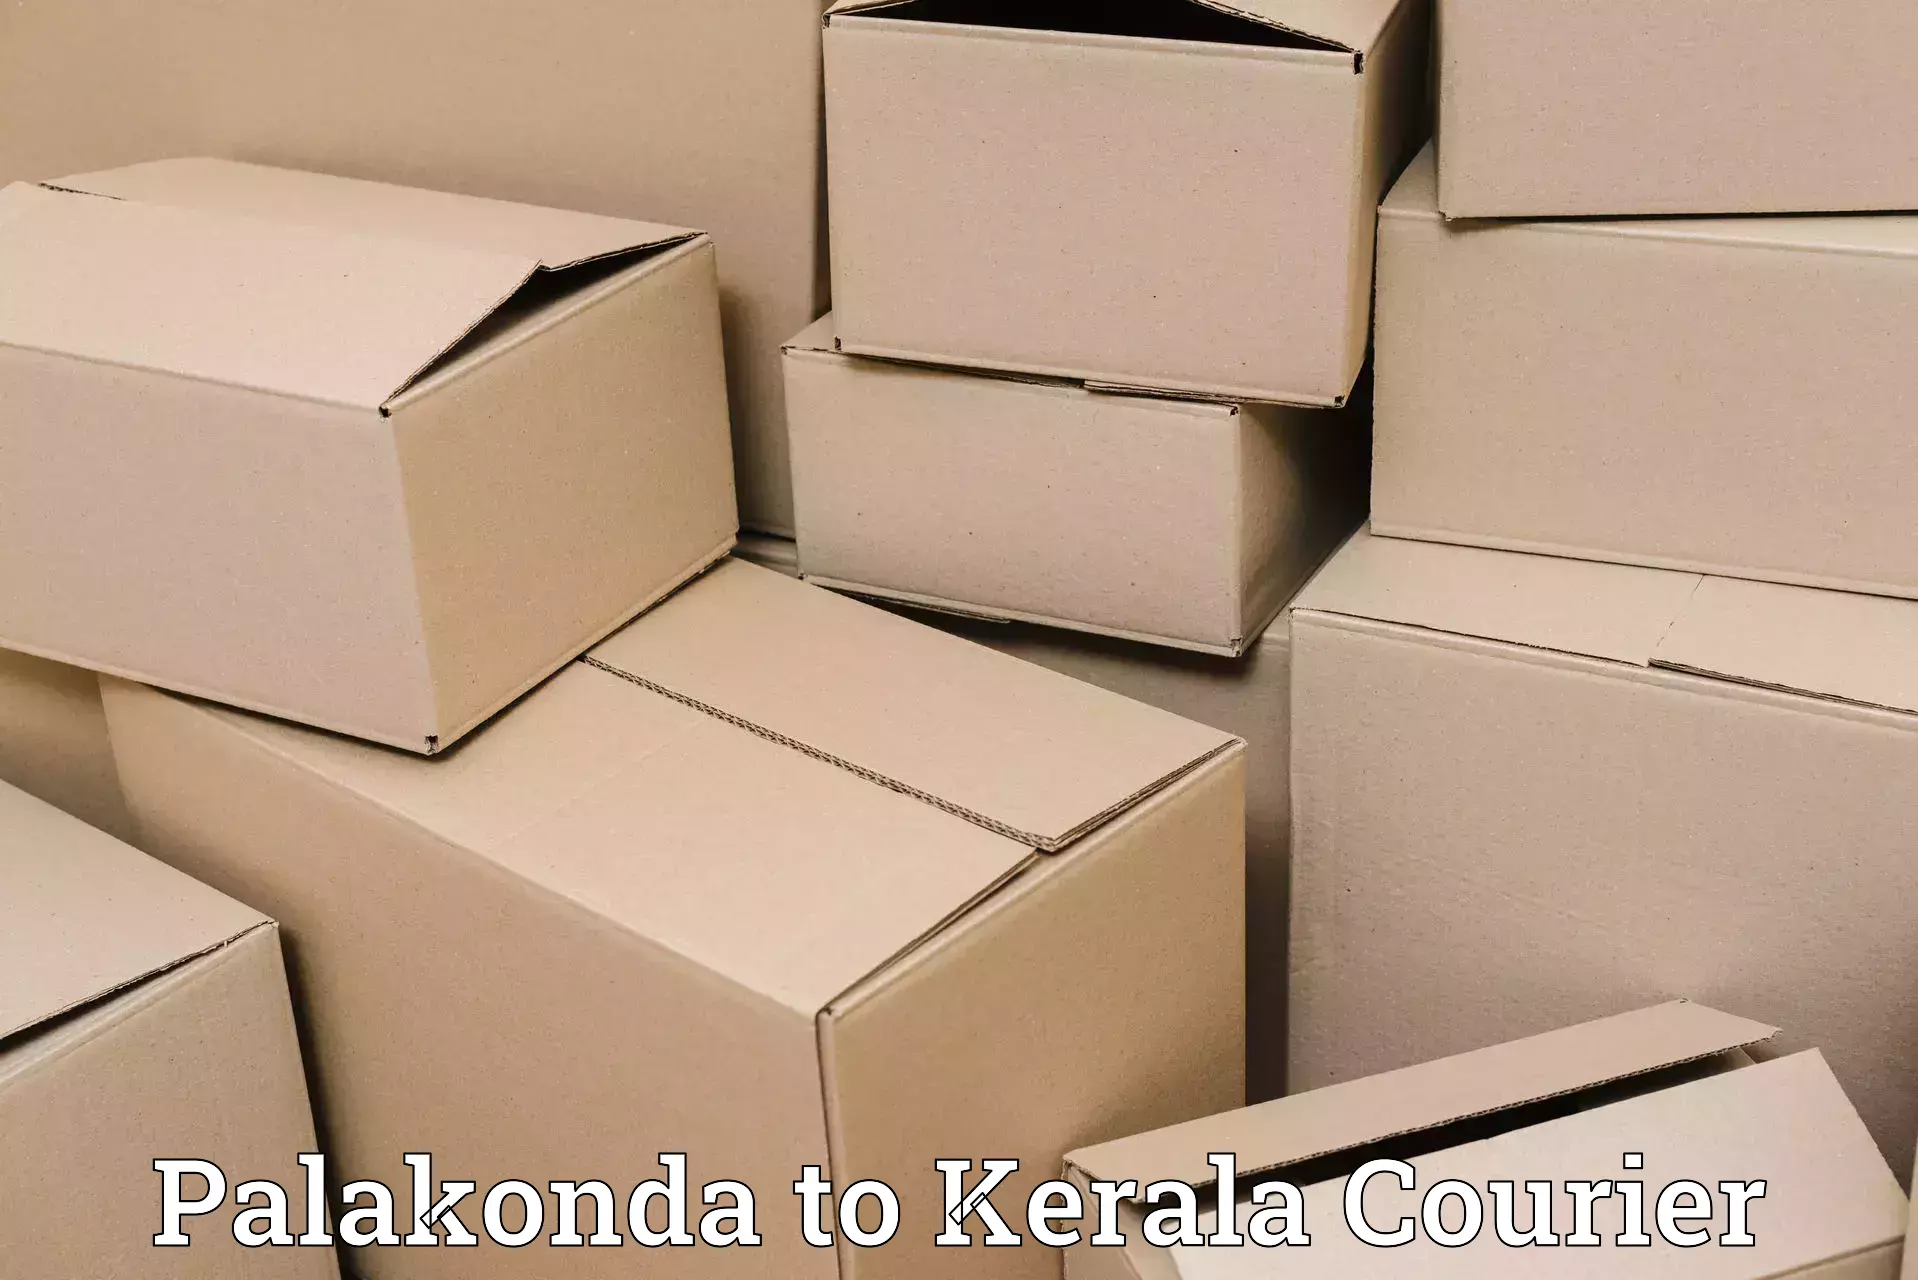 State-of-the-art courier technology Palakonda to Kerala